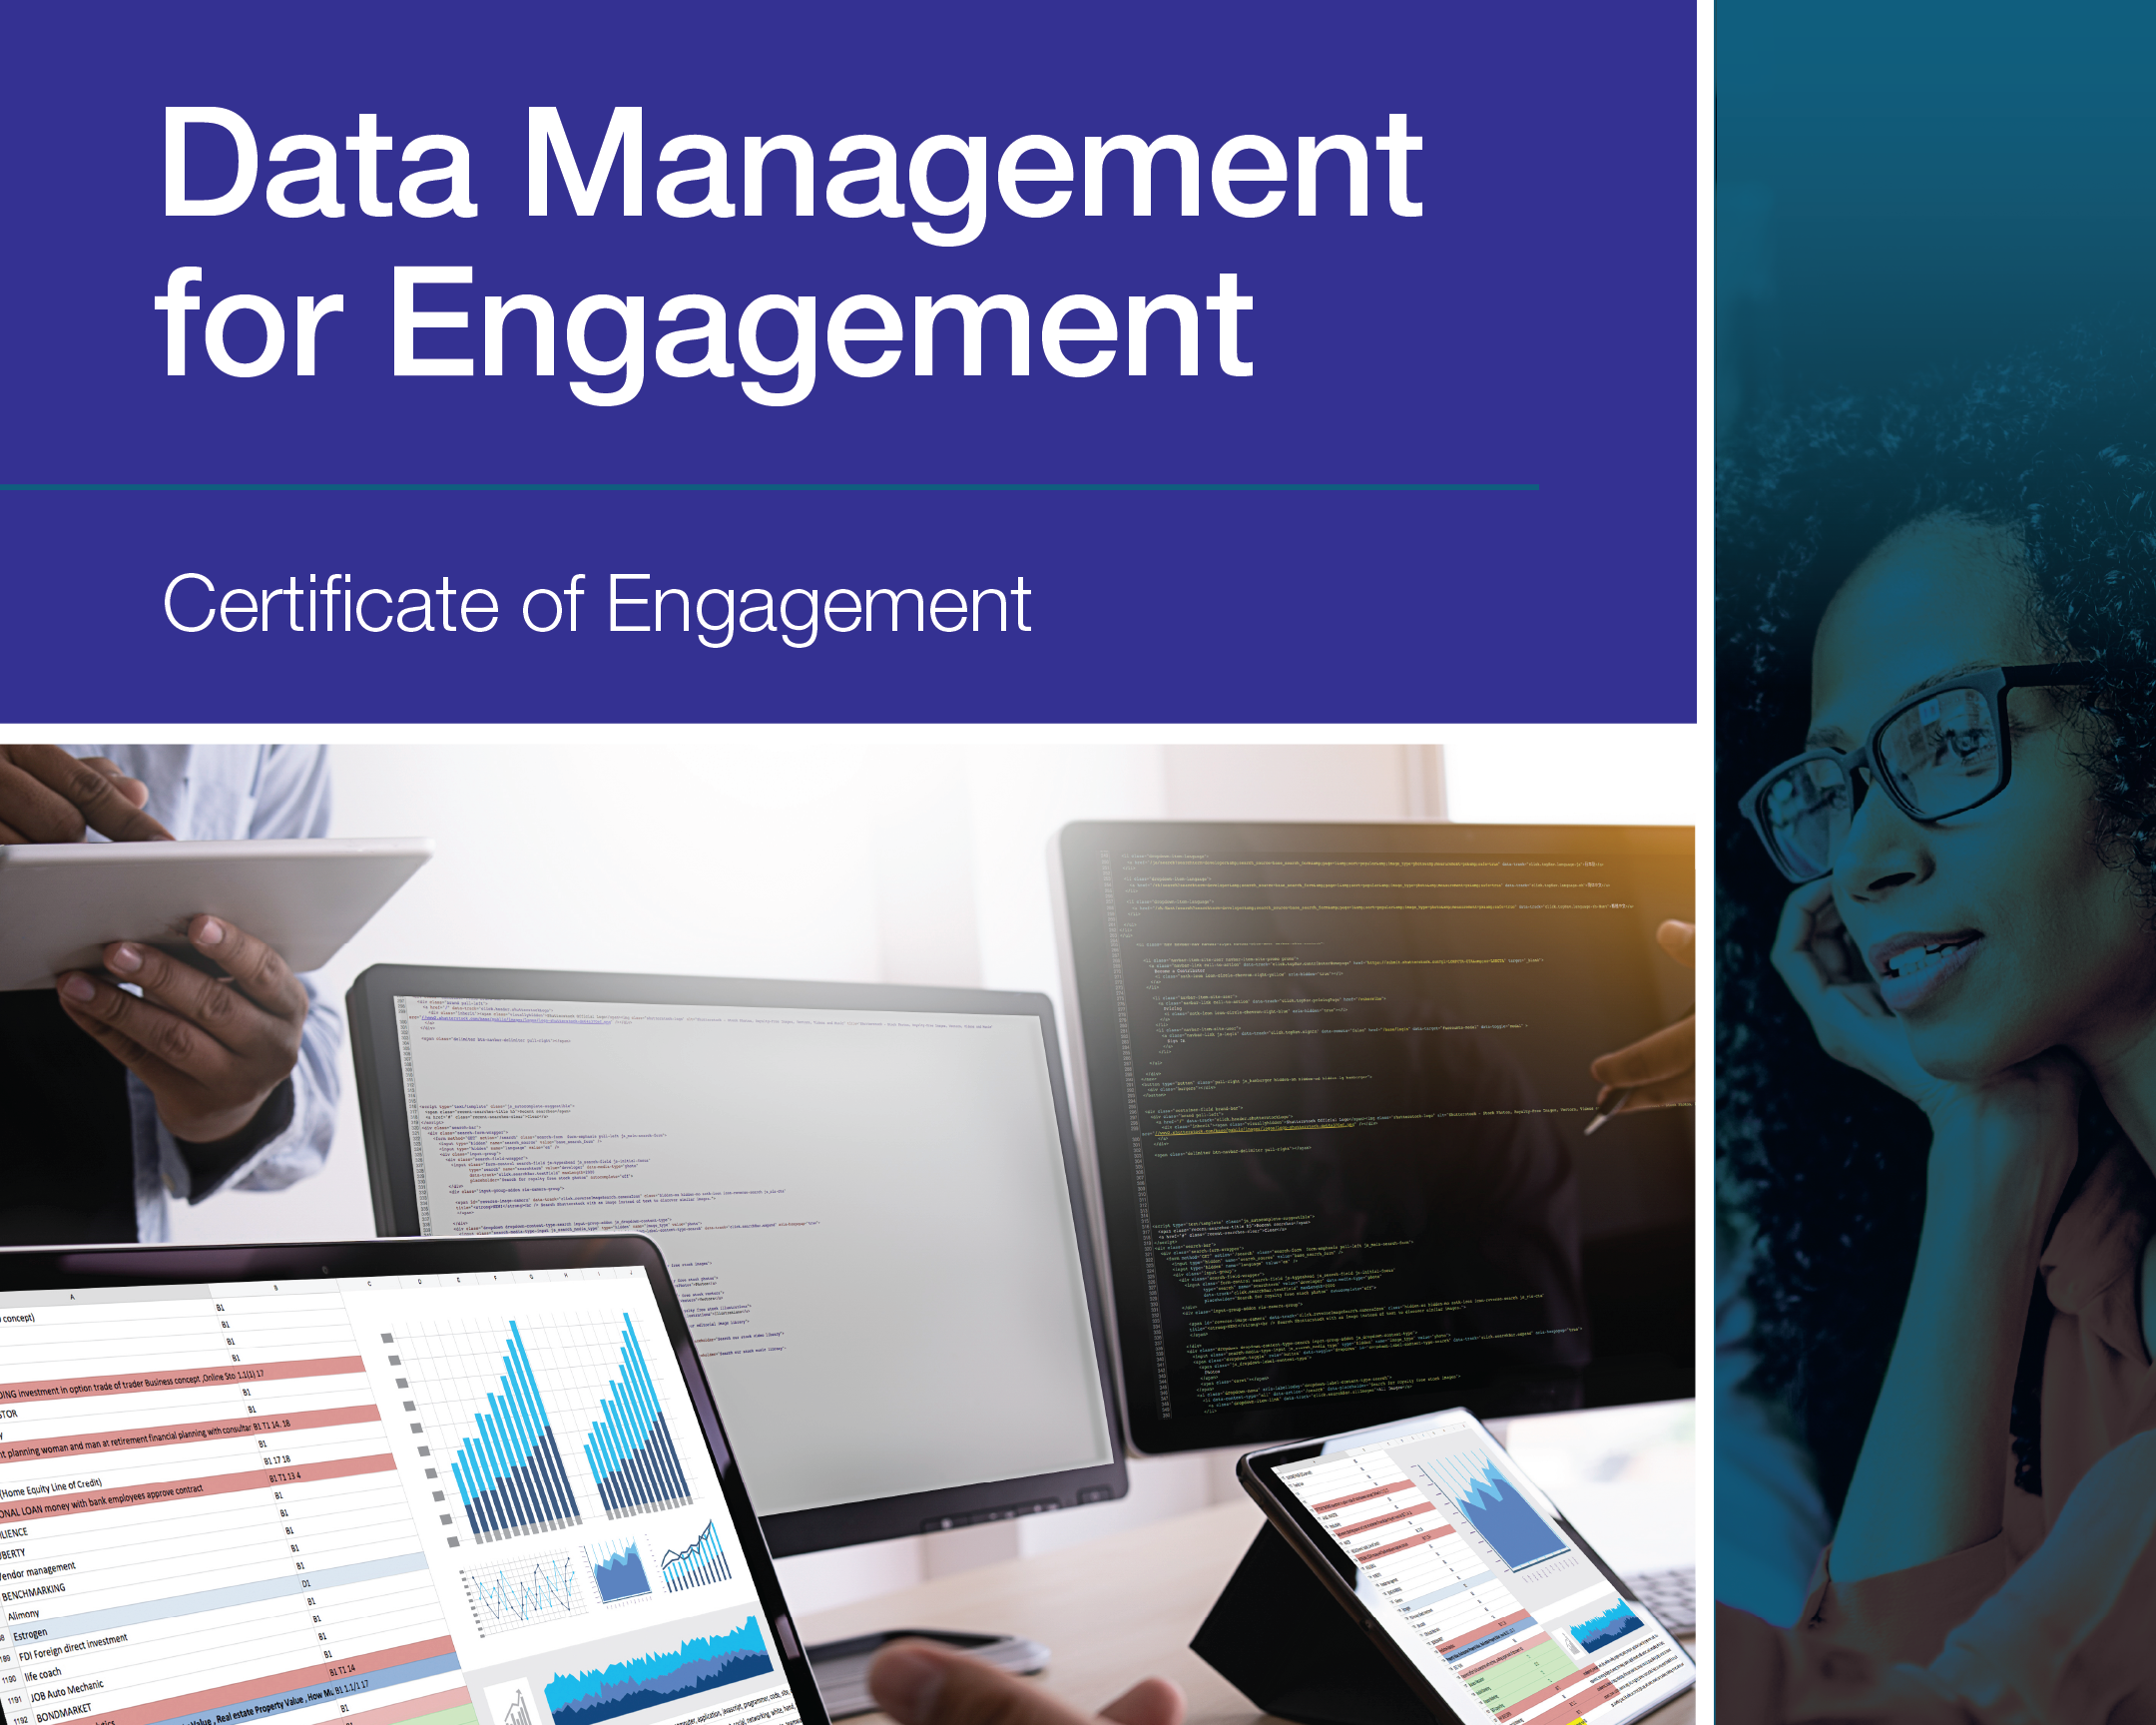 Data Management for Engagement